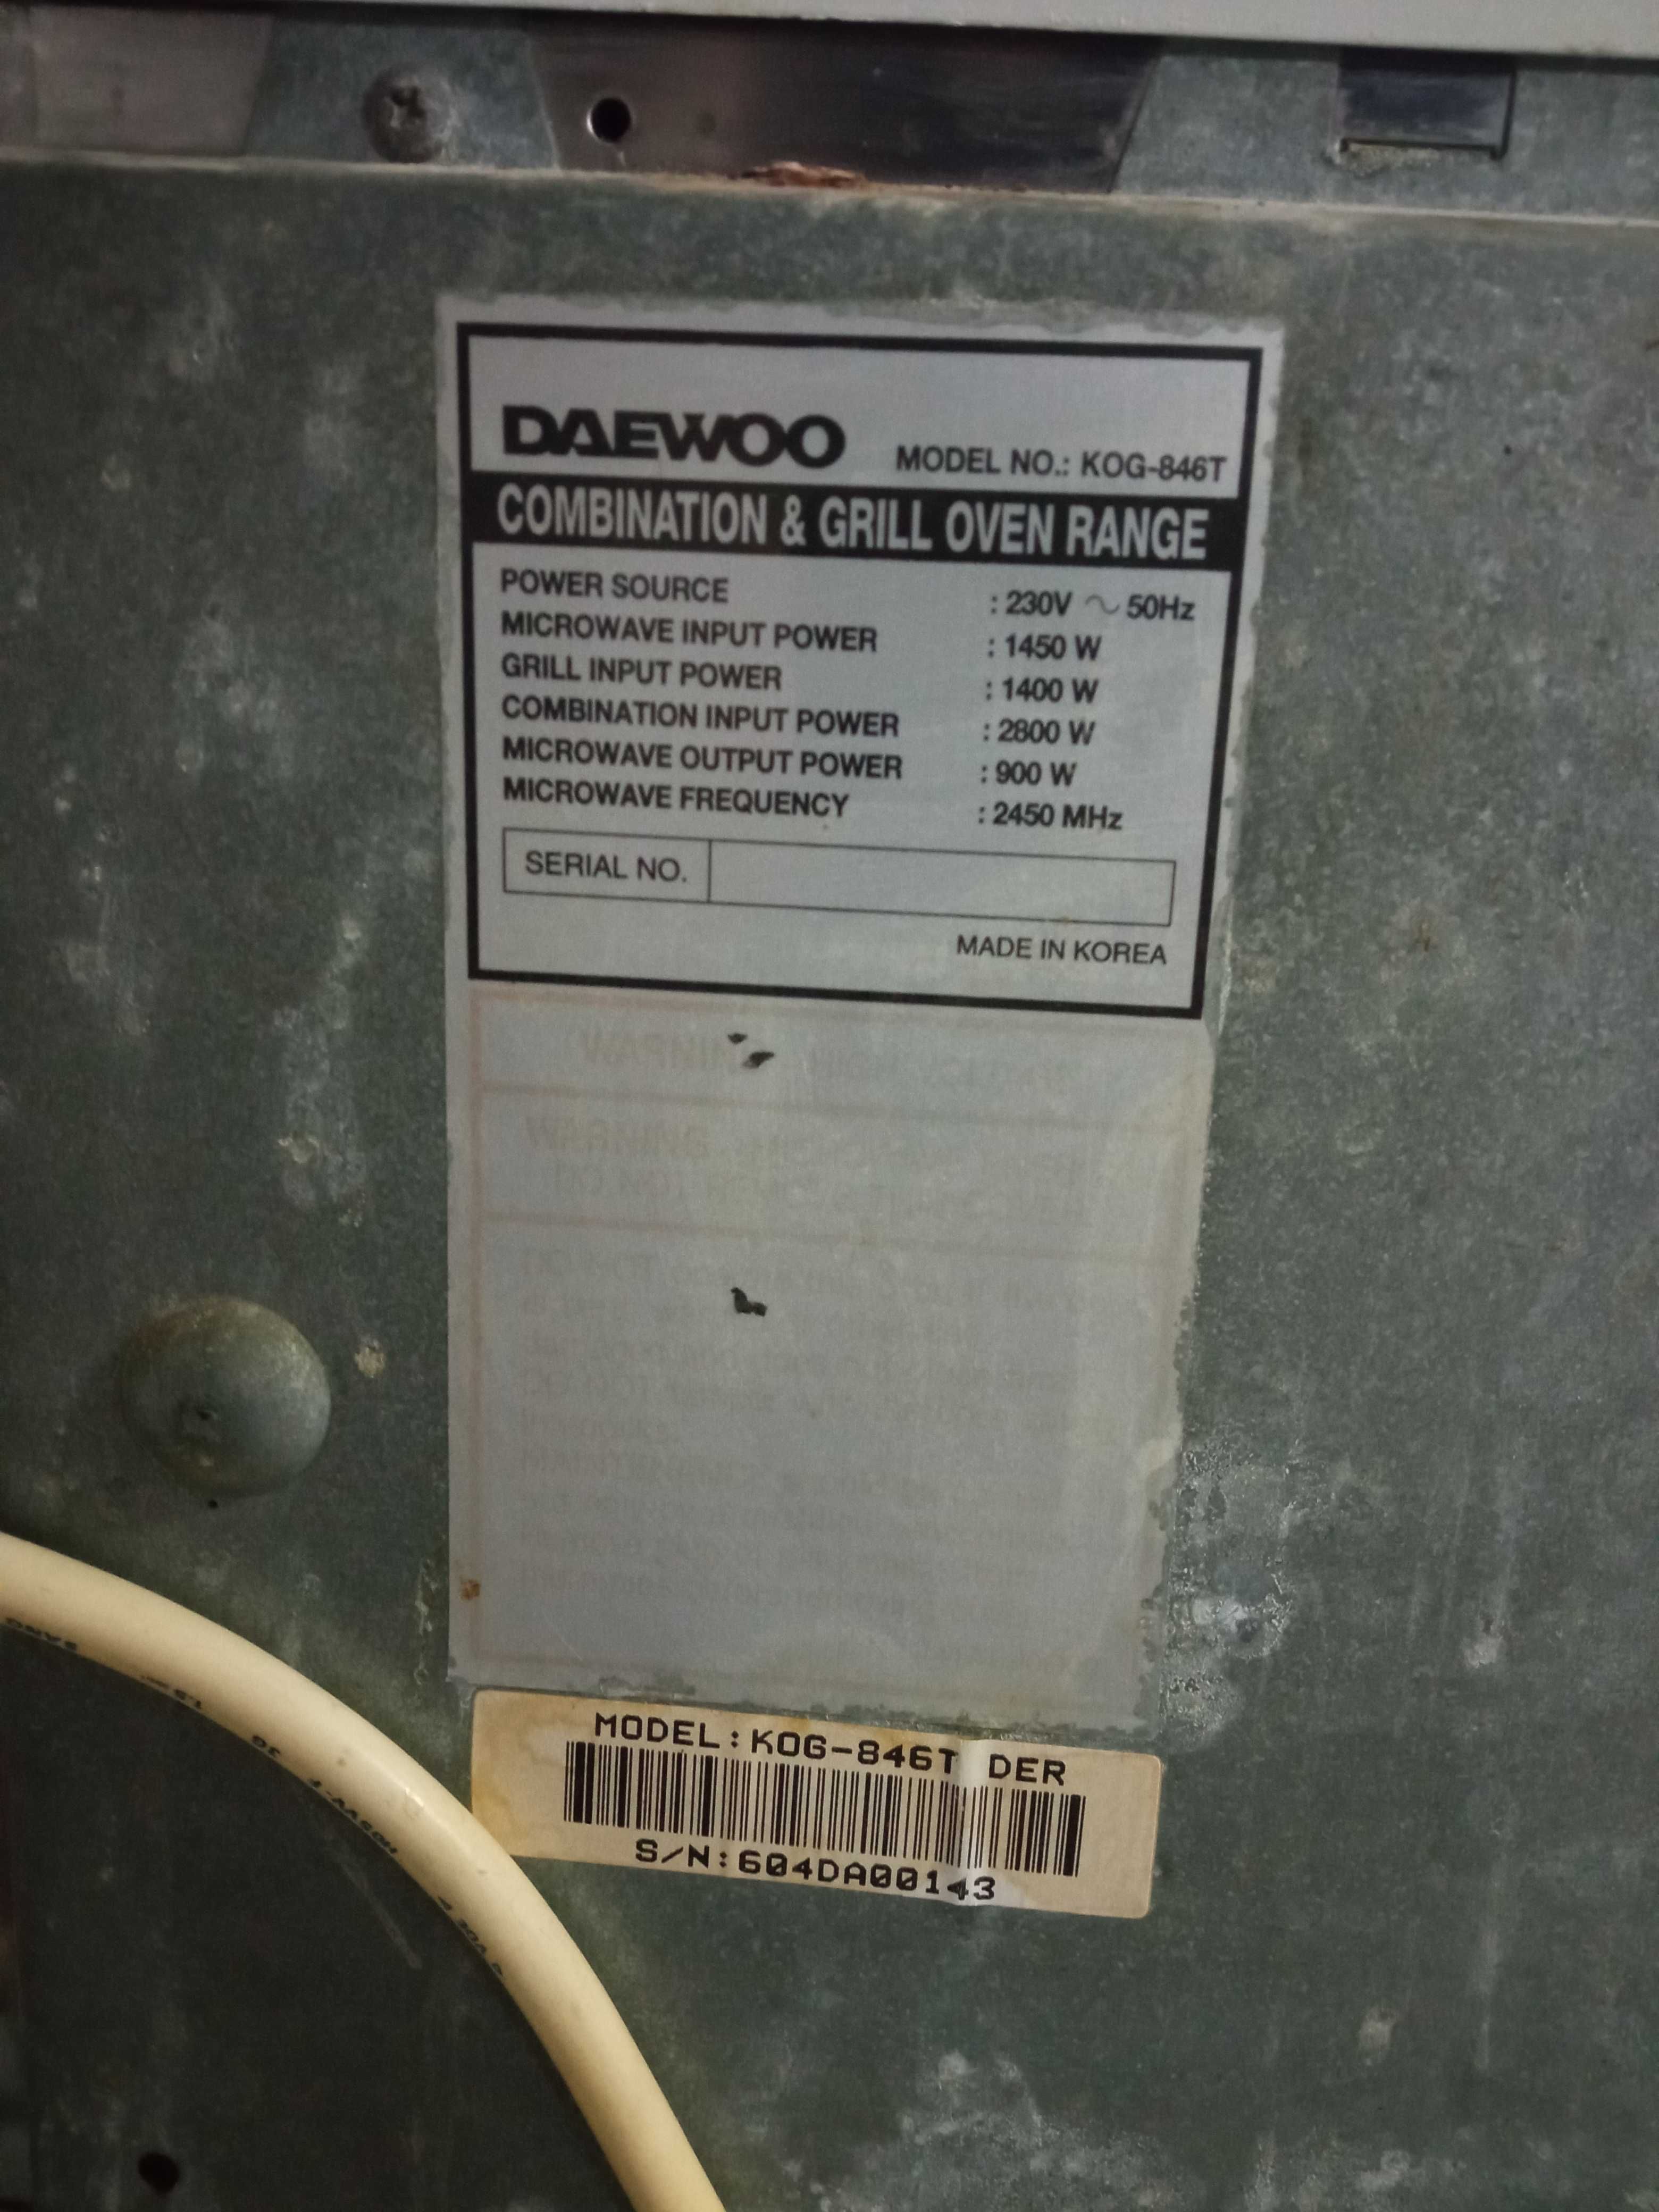 Cuptor cu microunde si functie grill, marca Daewoo.